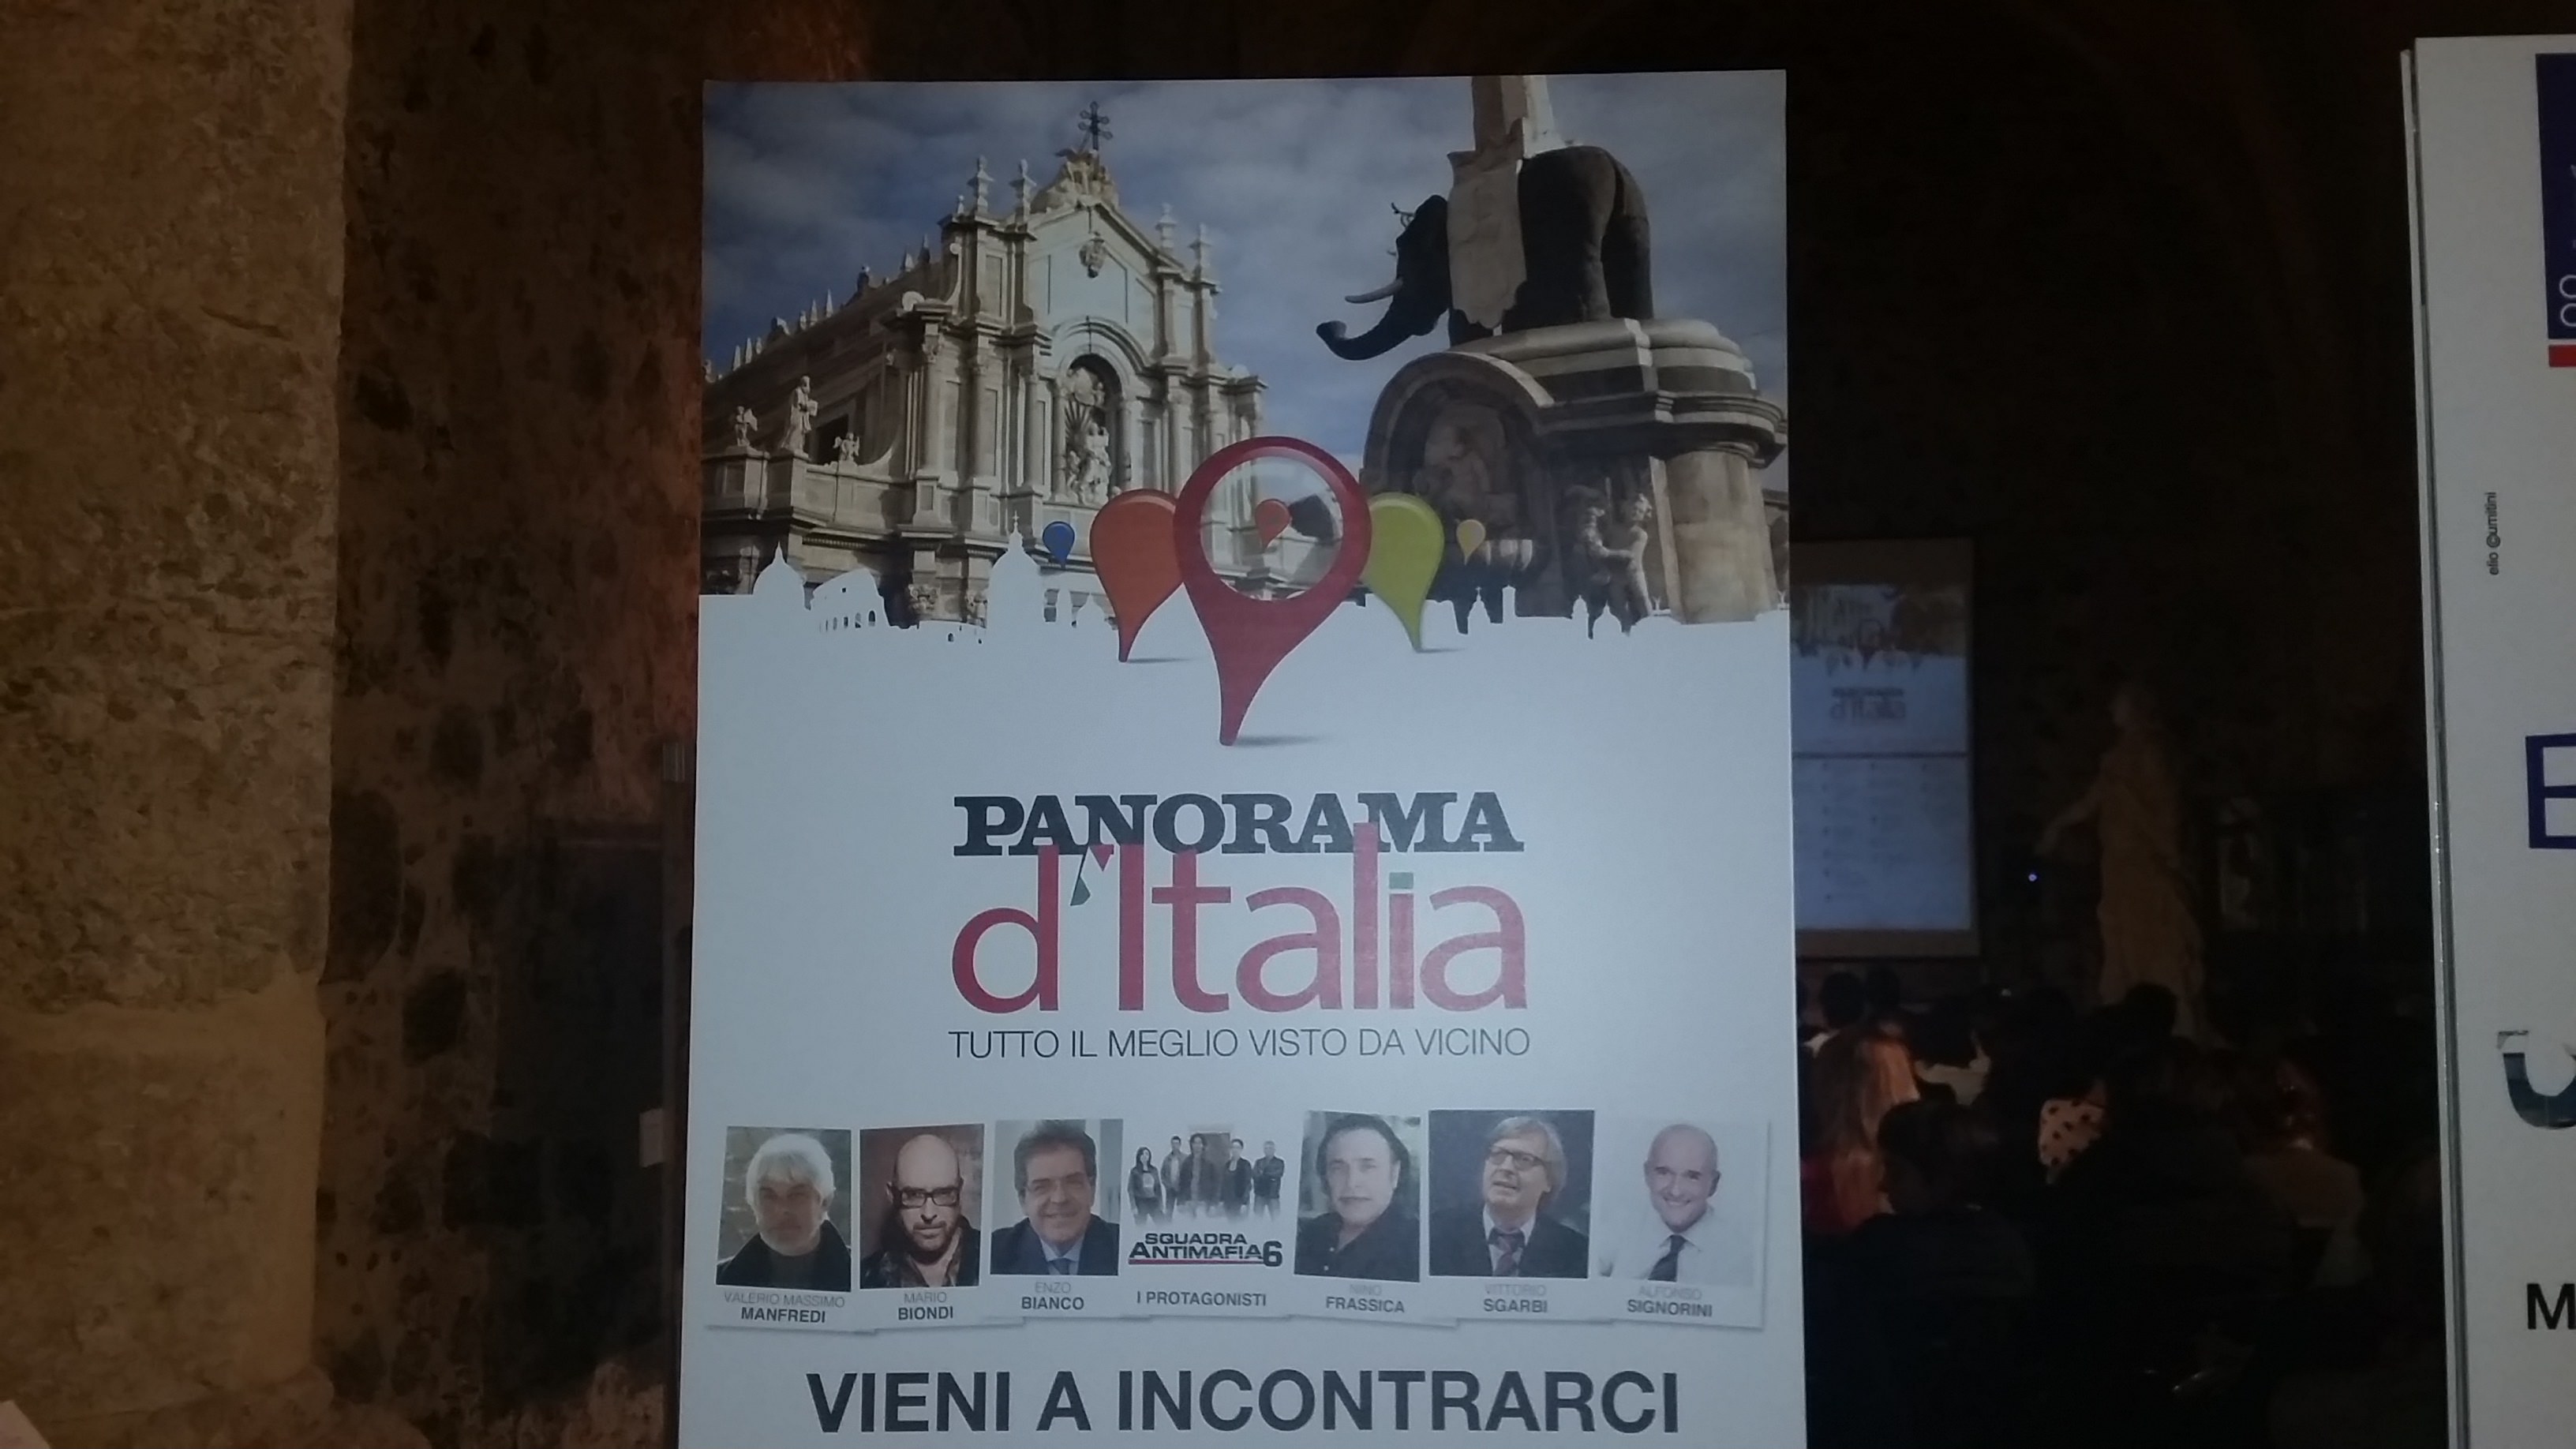 Alfonso Signorini si racconta a Catania con “Panorama d’Italia”